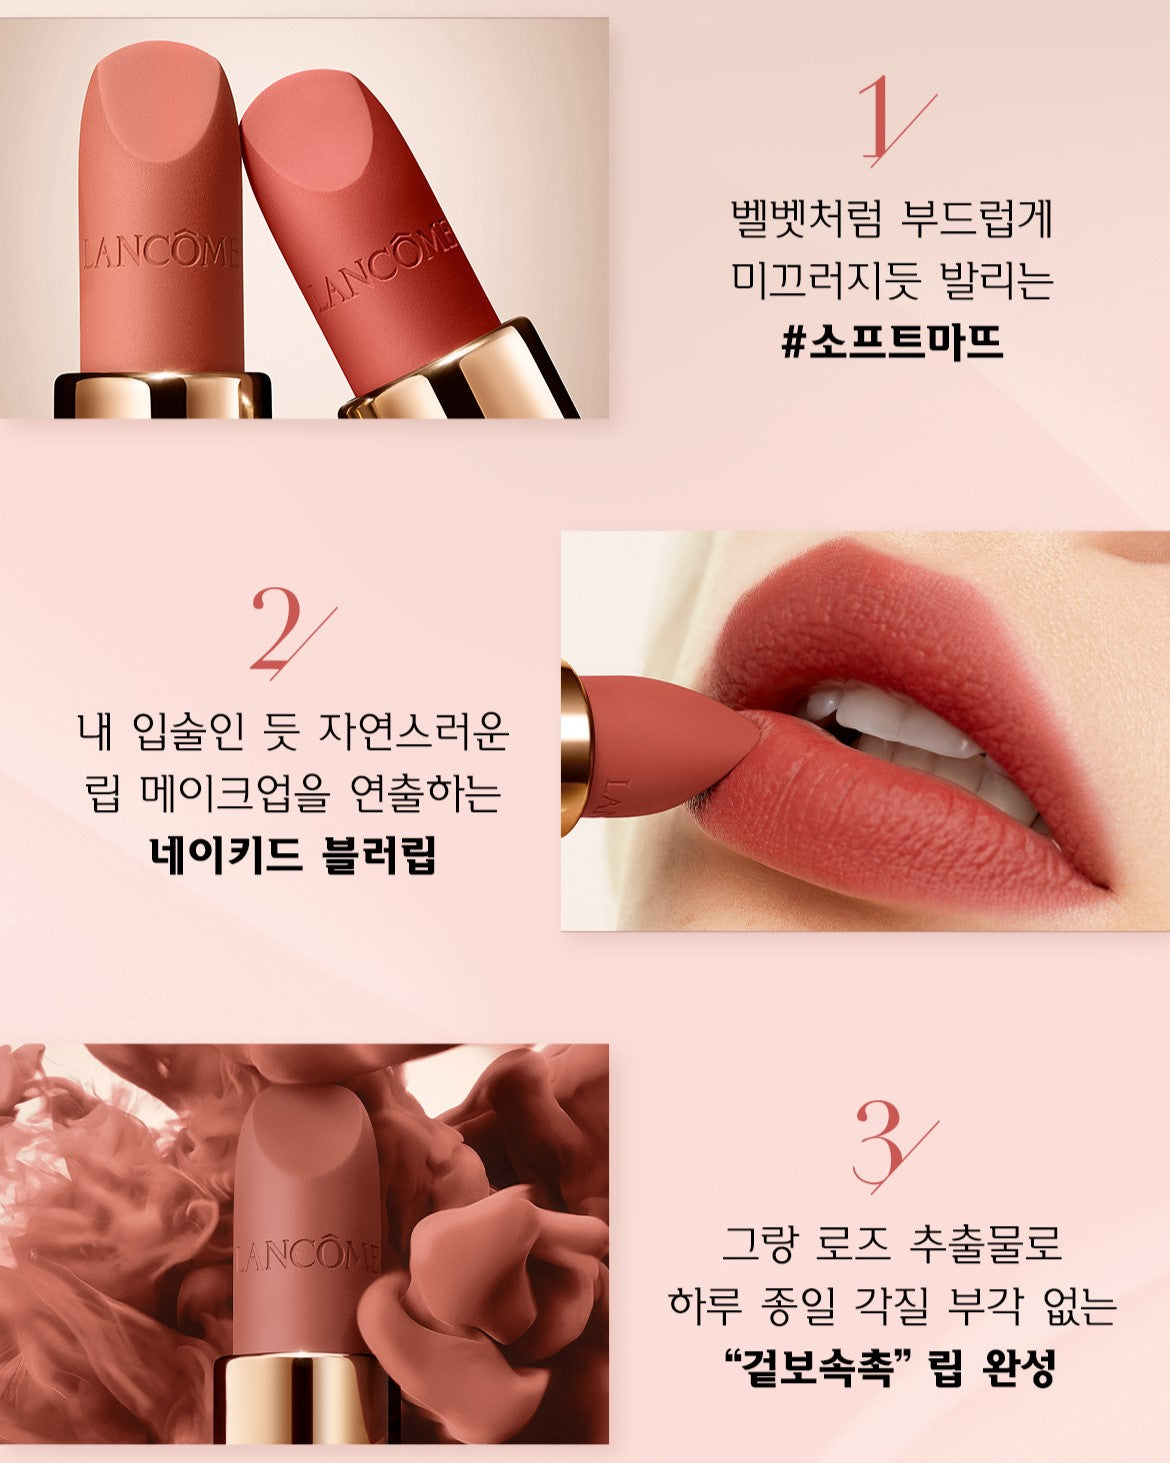 Son LANCÔME L'Absolu Rouge Intimatte Lipstick #299 French Cashmere